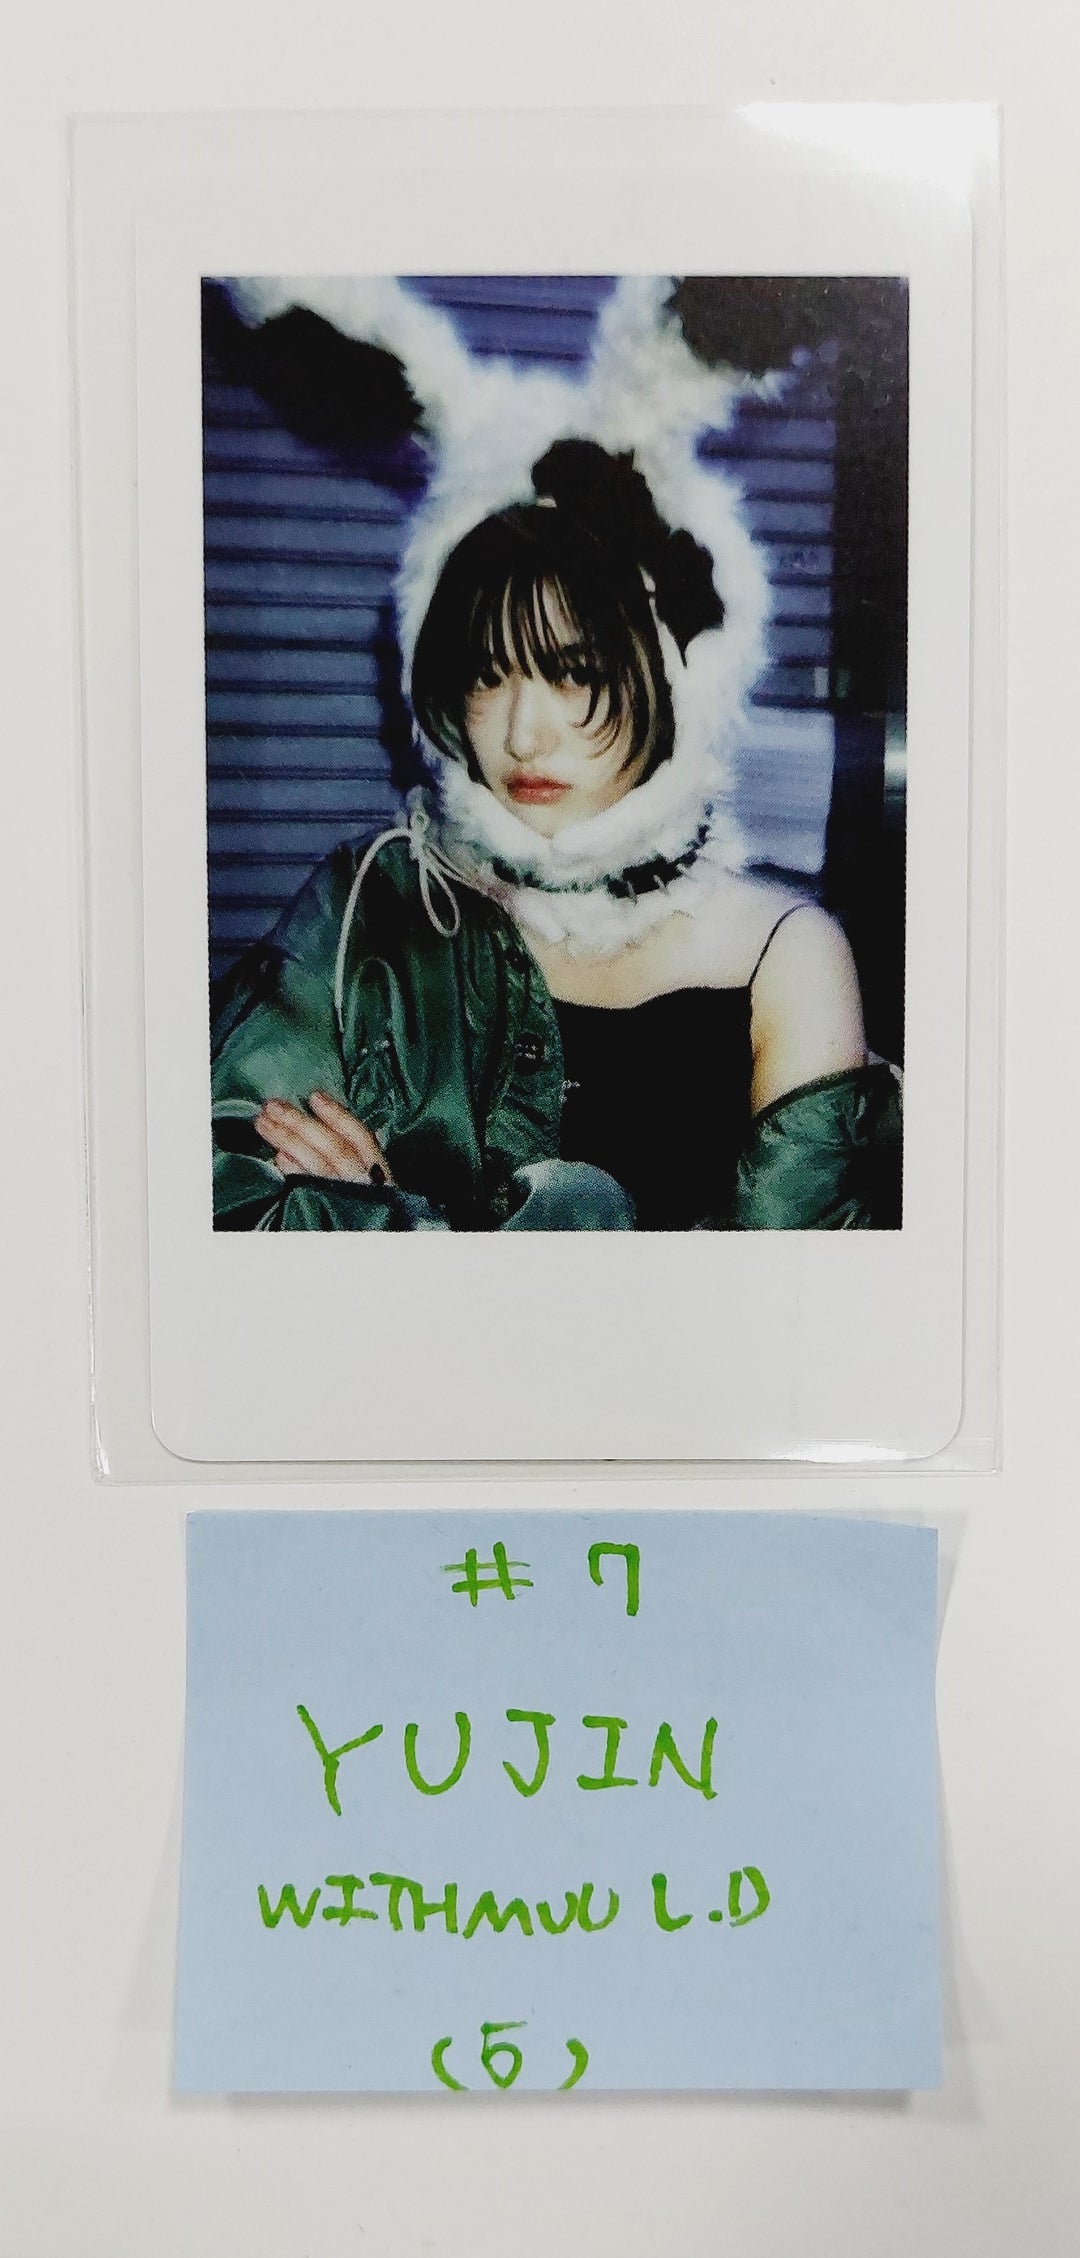 IVE - 1st EP "I'VE MINE" [Withmuu, Soundwave] Lucky Draw Event Photocard & Polaroid Type Photocard [23.10.14]